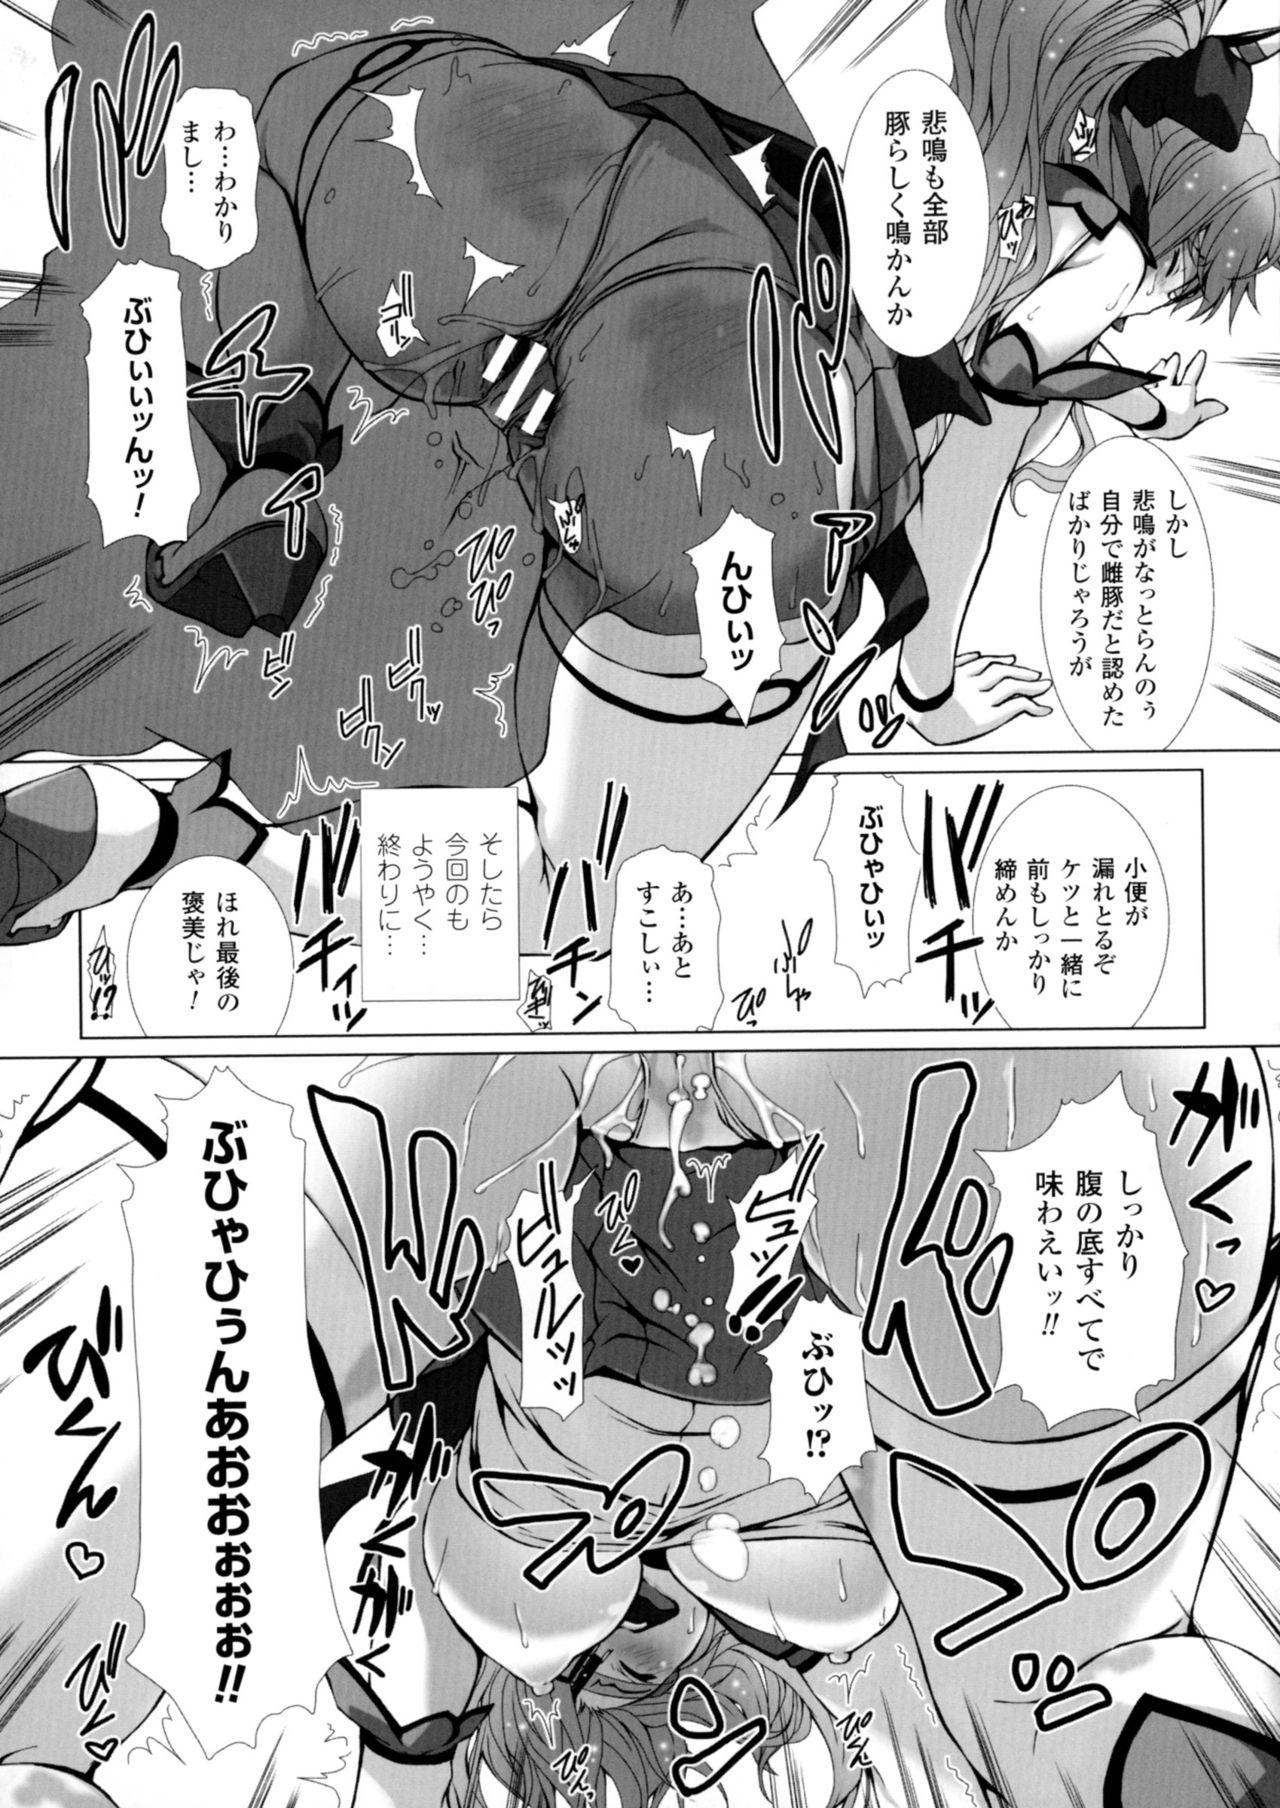 Seigi no Heroine Kangoku File DX Vol. 4 44